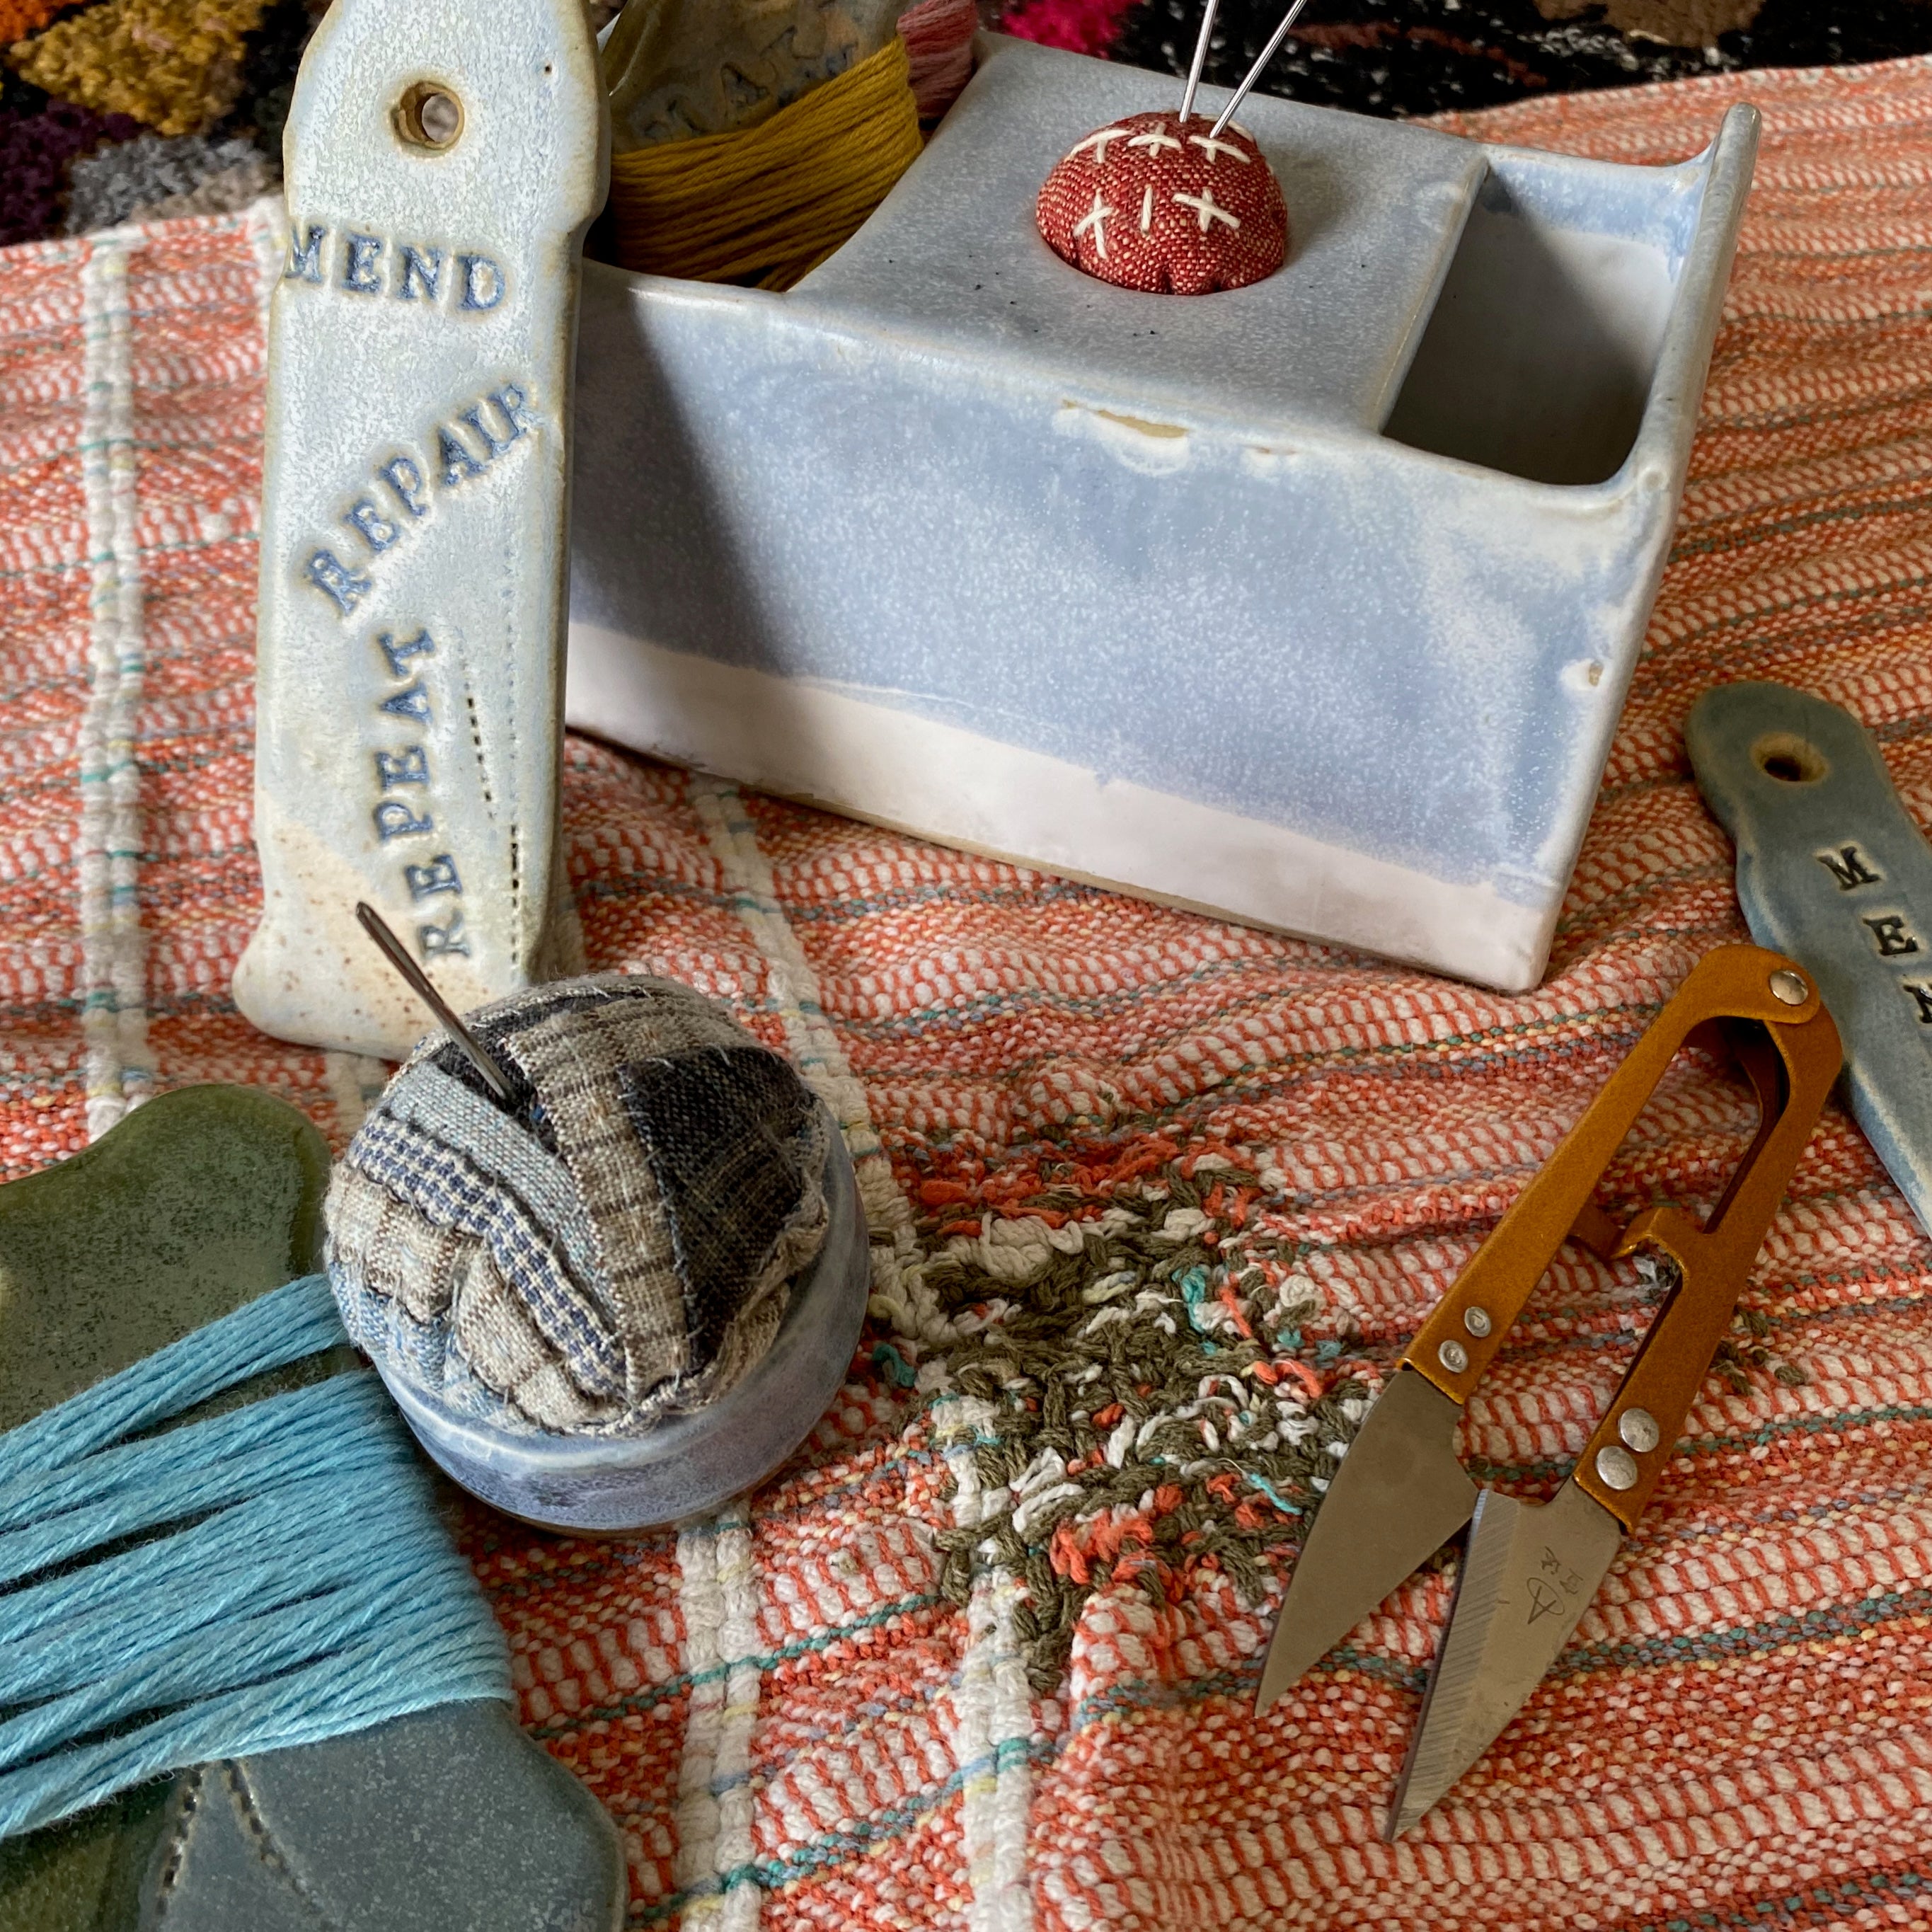 Stitching, Mending and Japanese Boro ceramic tools